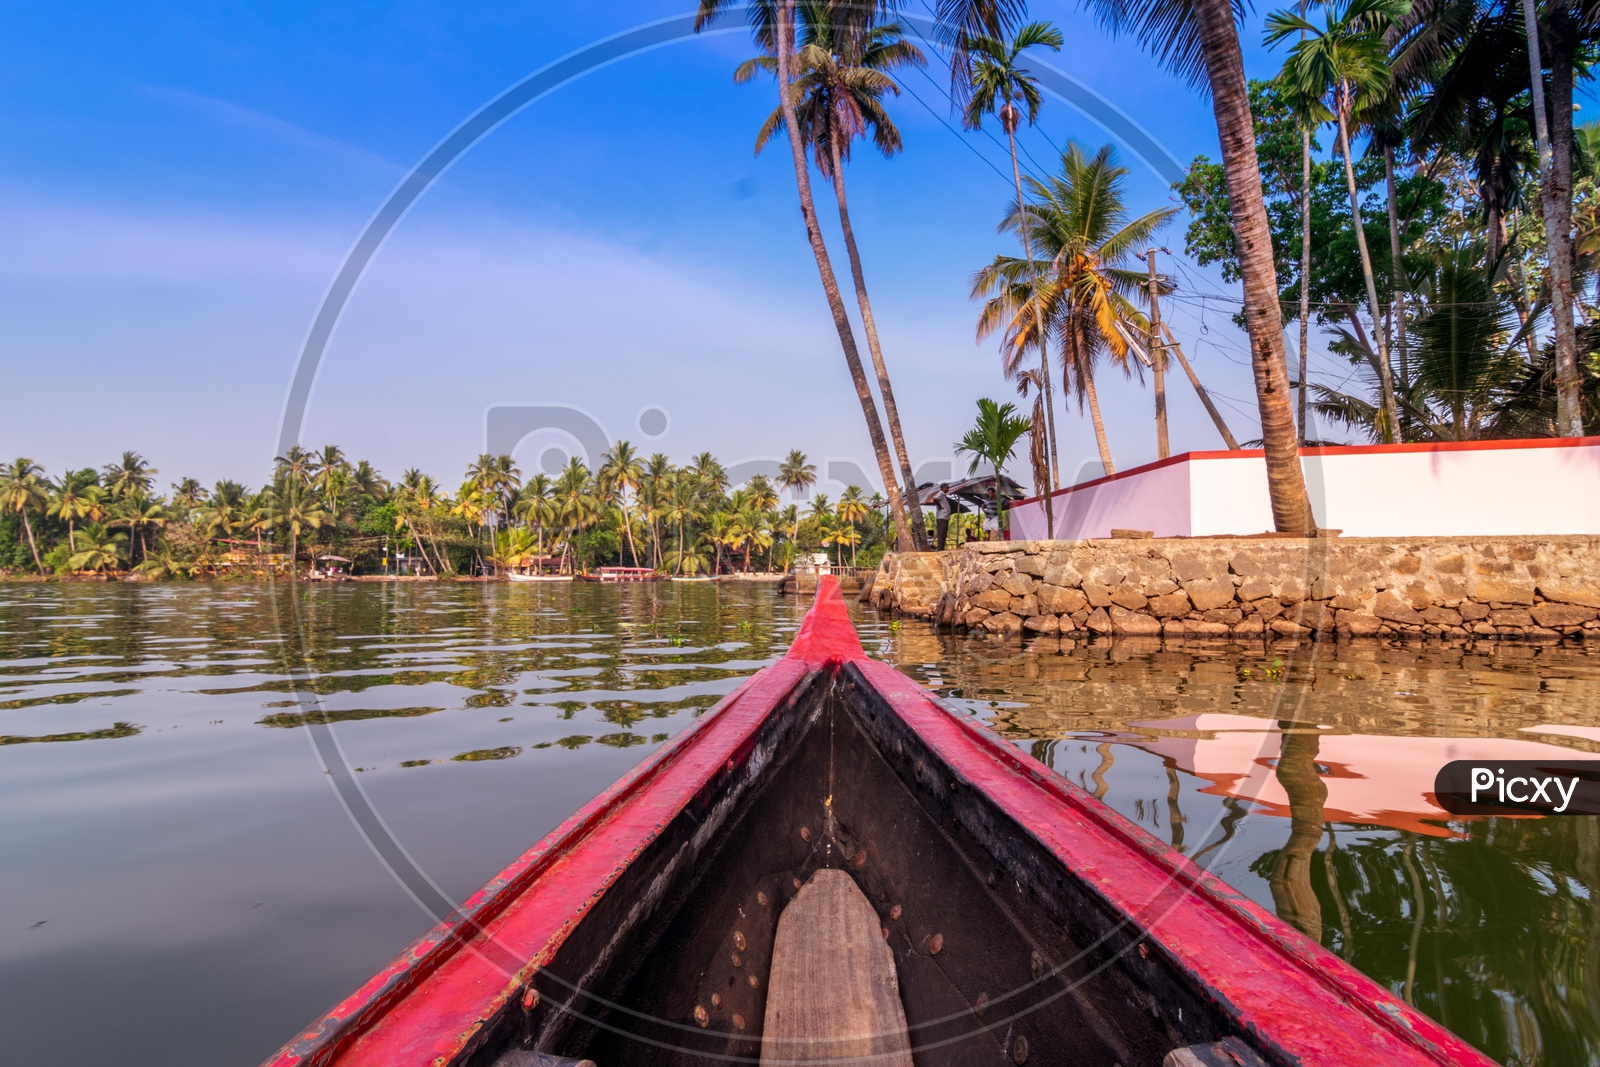 A Boat amidst the kerela backwaters